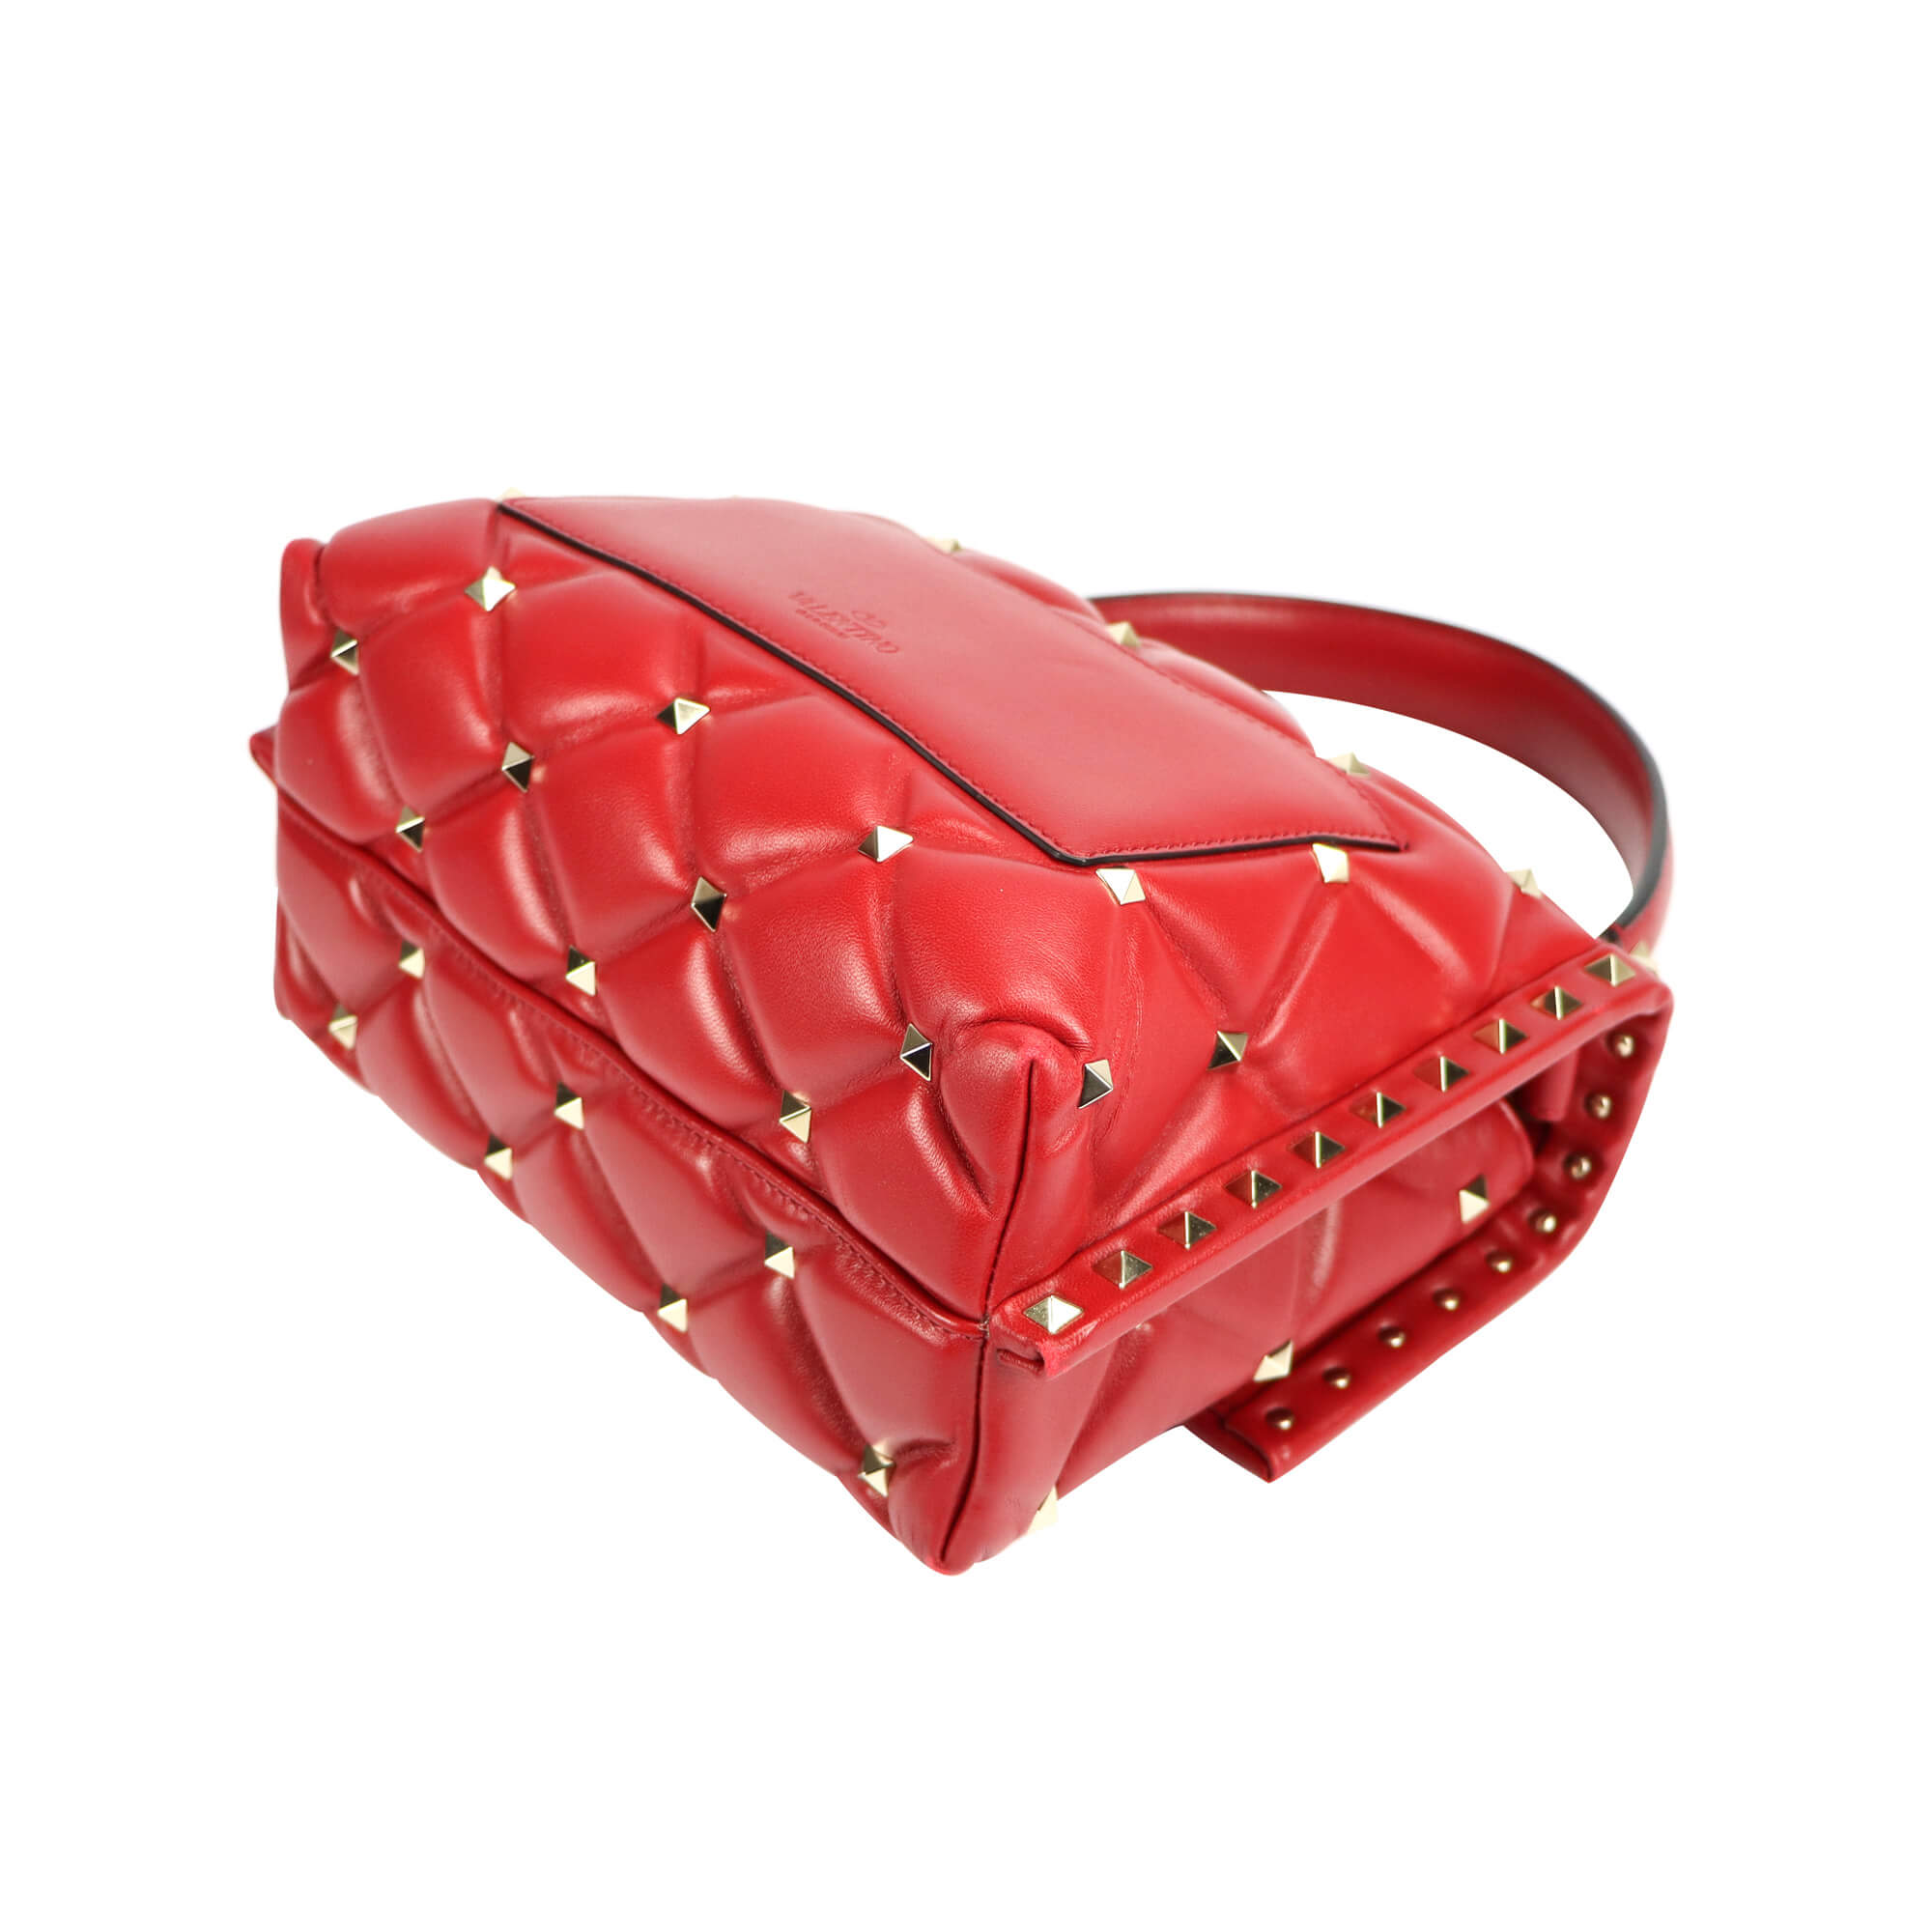 Candystud leather crossbody bag Valentino Garavani Red in Leather - 32817283